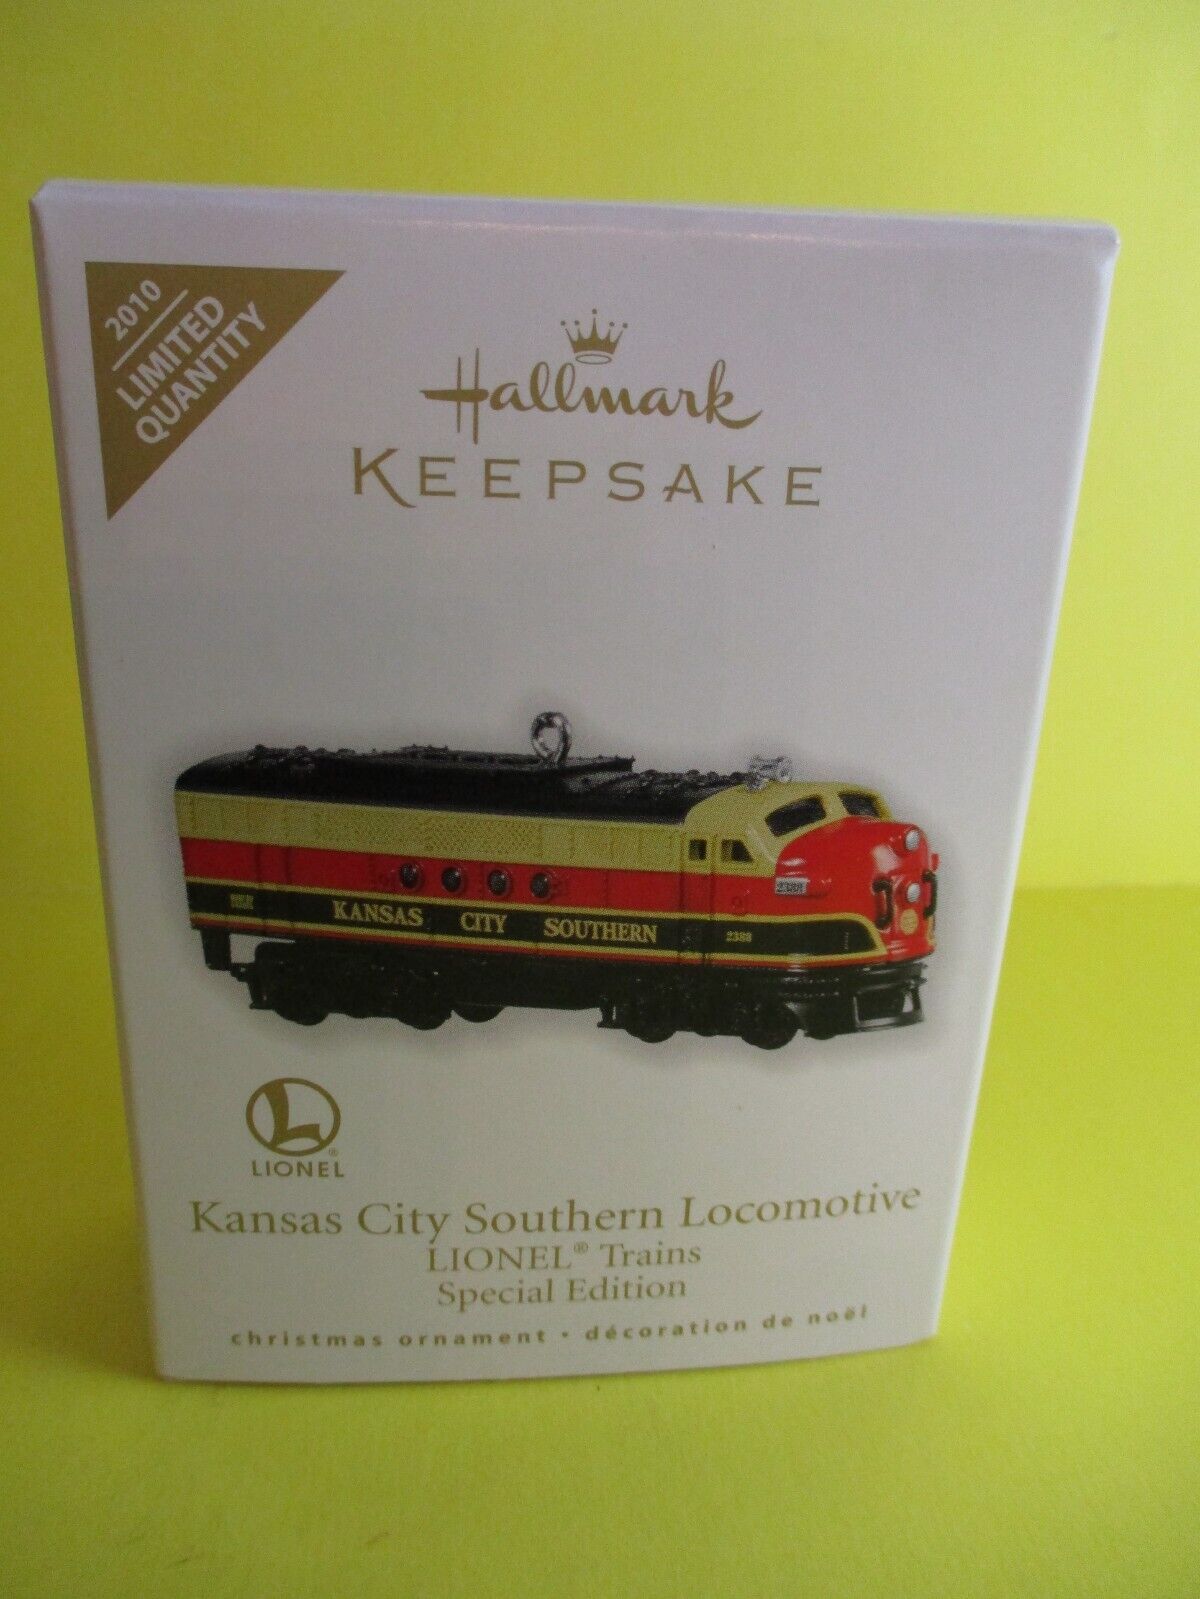 2010 Hallmark Kansas City Southern Locomotive Lionel Trains Spec Ed New but SDB